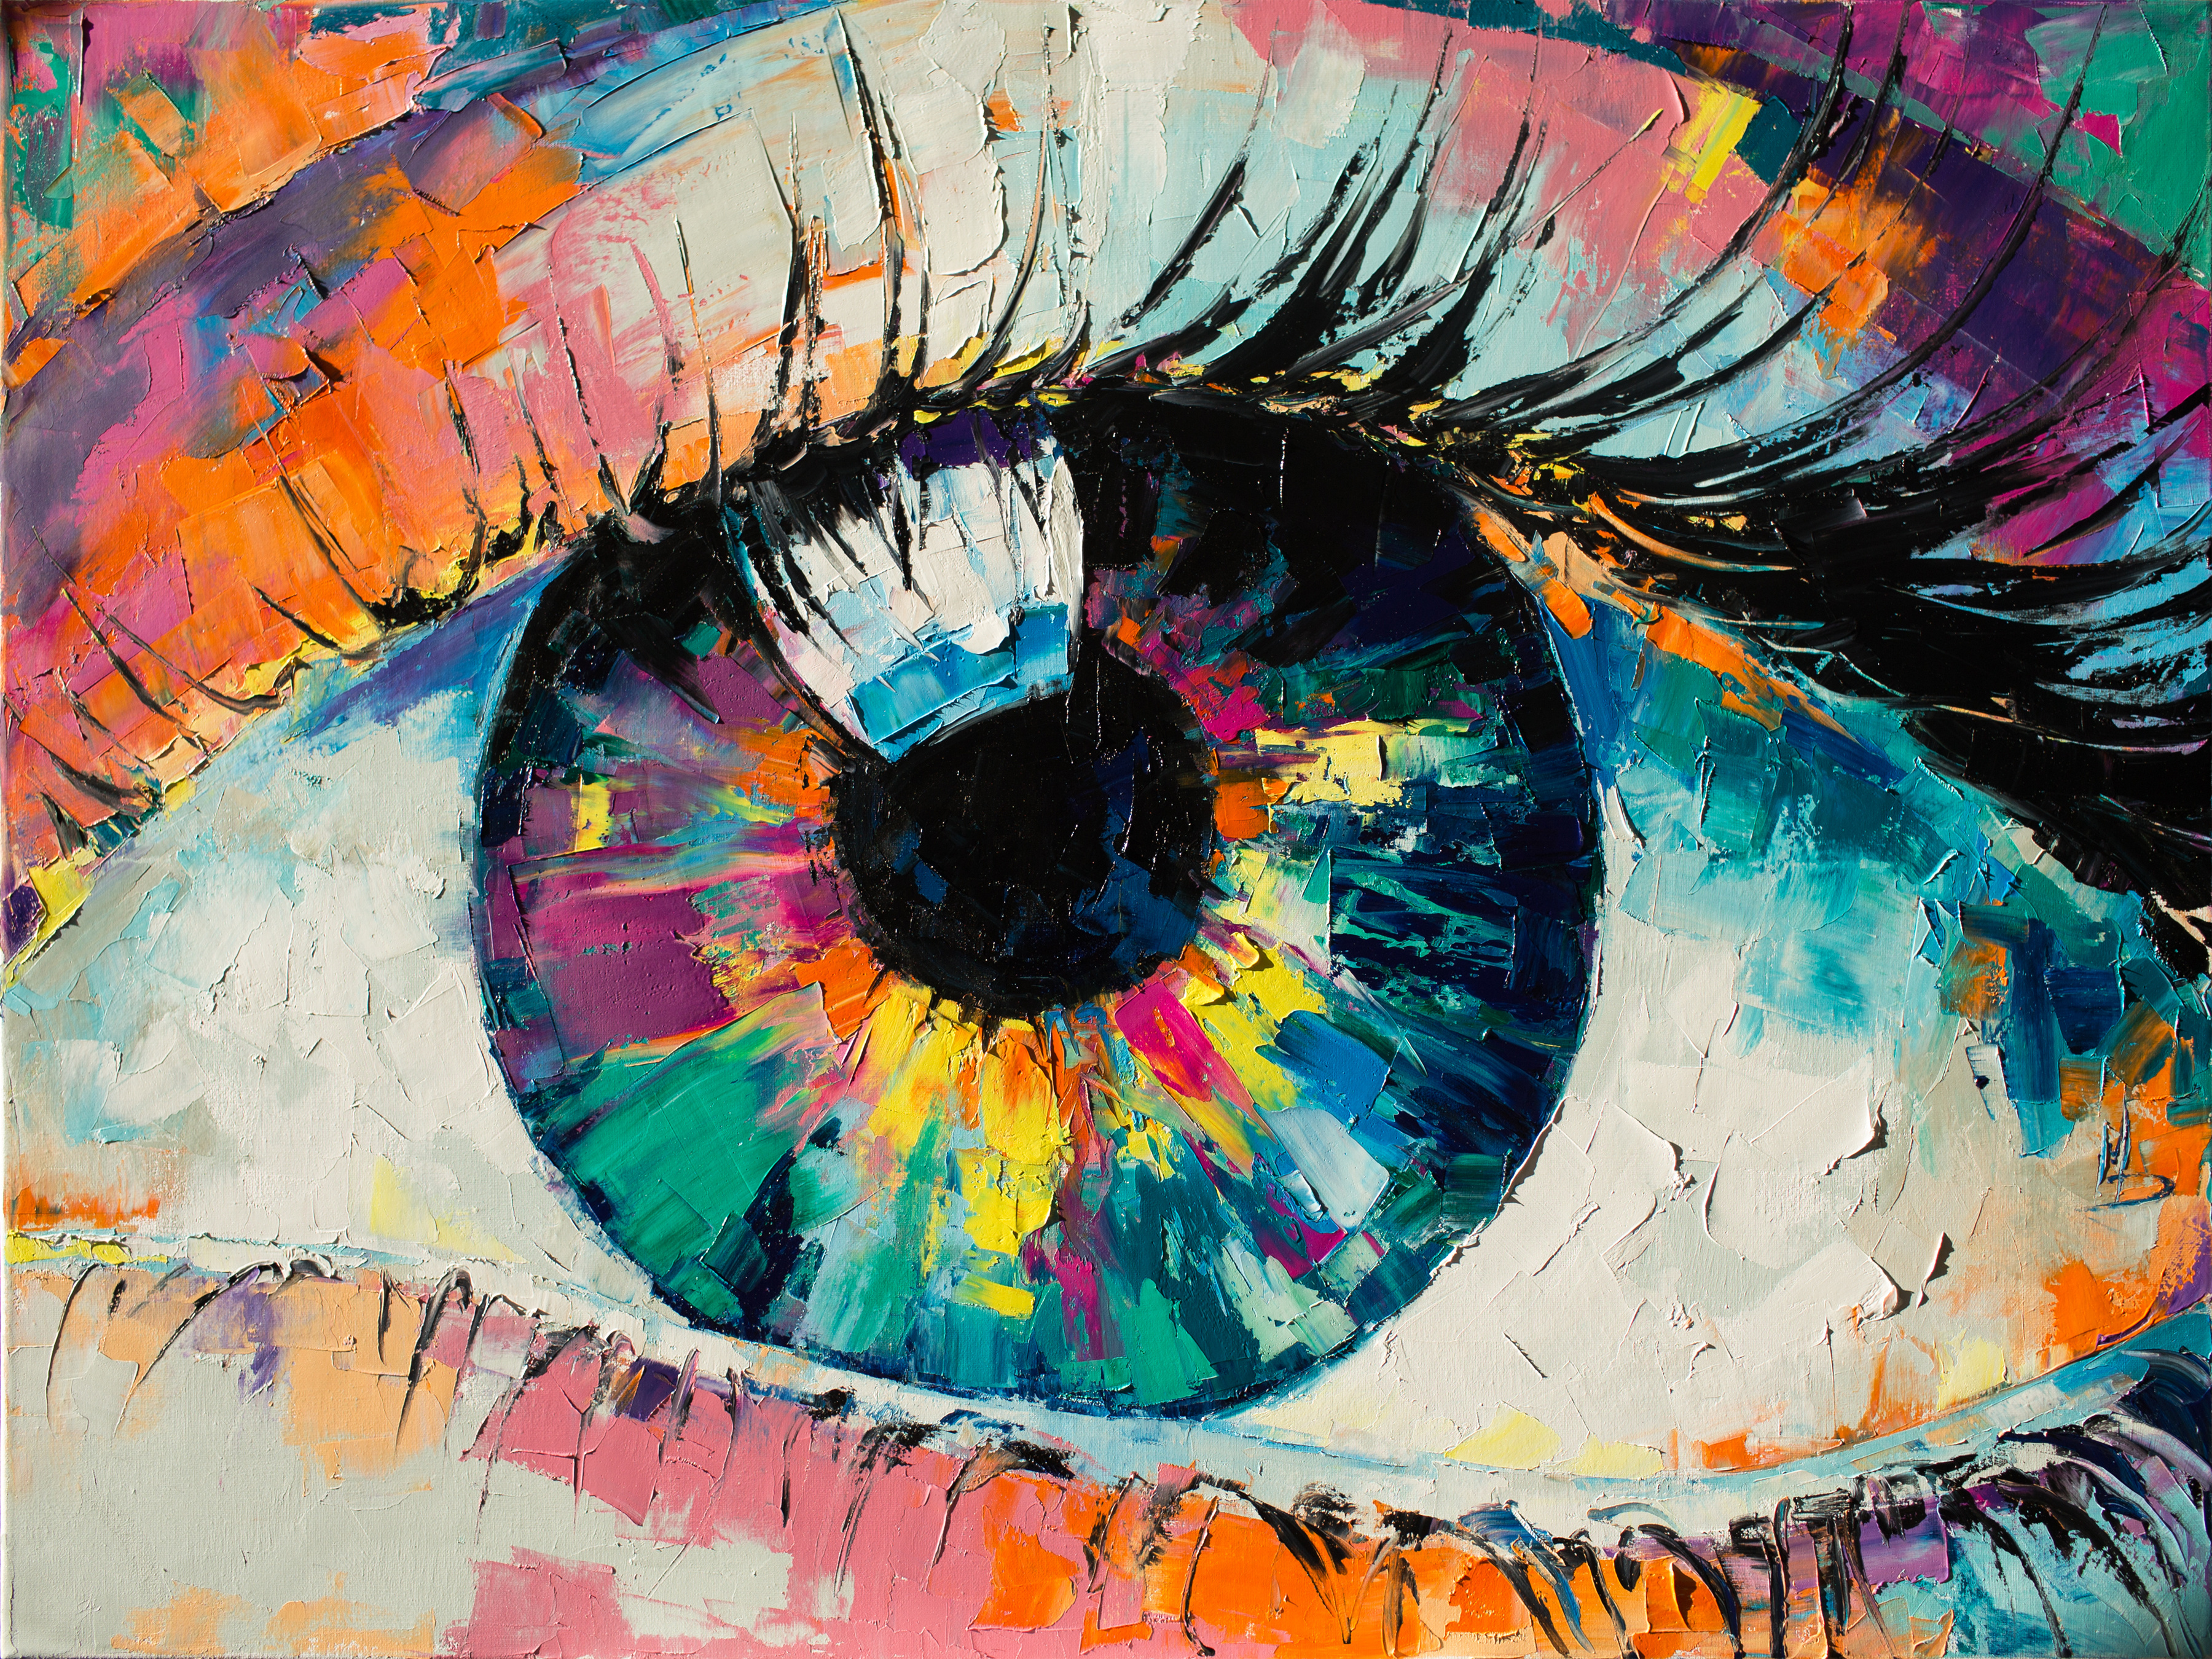 Painting eye